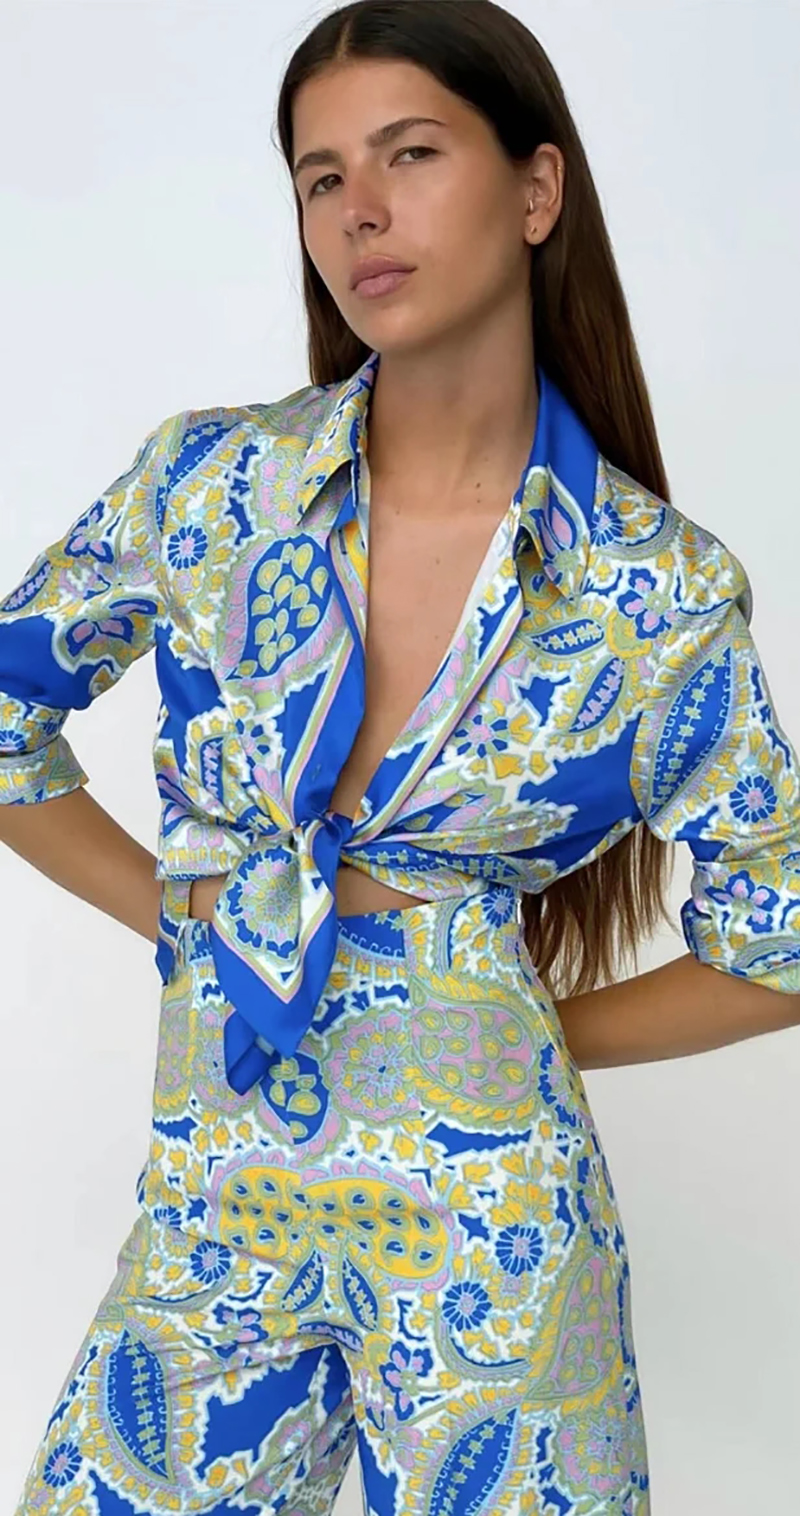 Fashion Blue Printed Lapel Button-down Shirt  Woven,Blouses